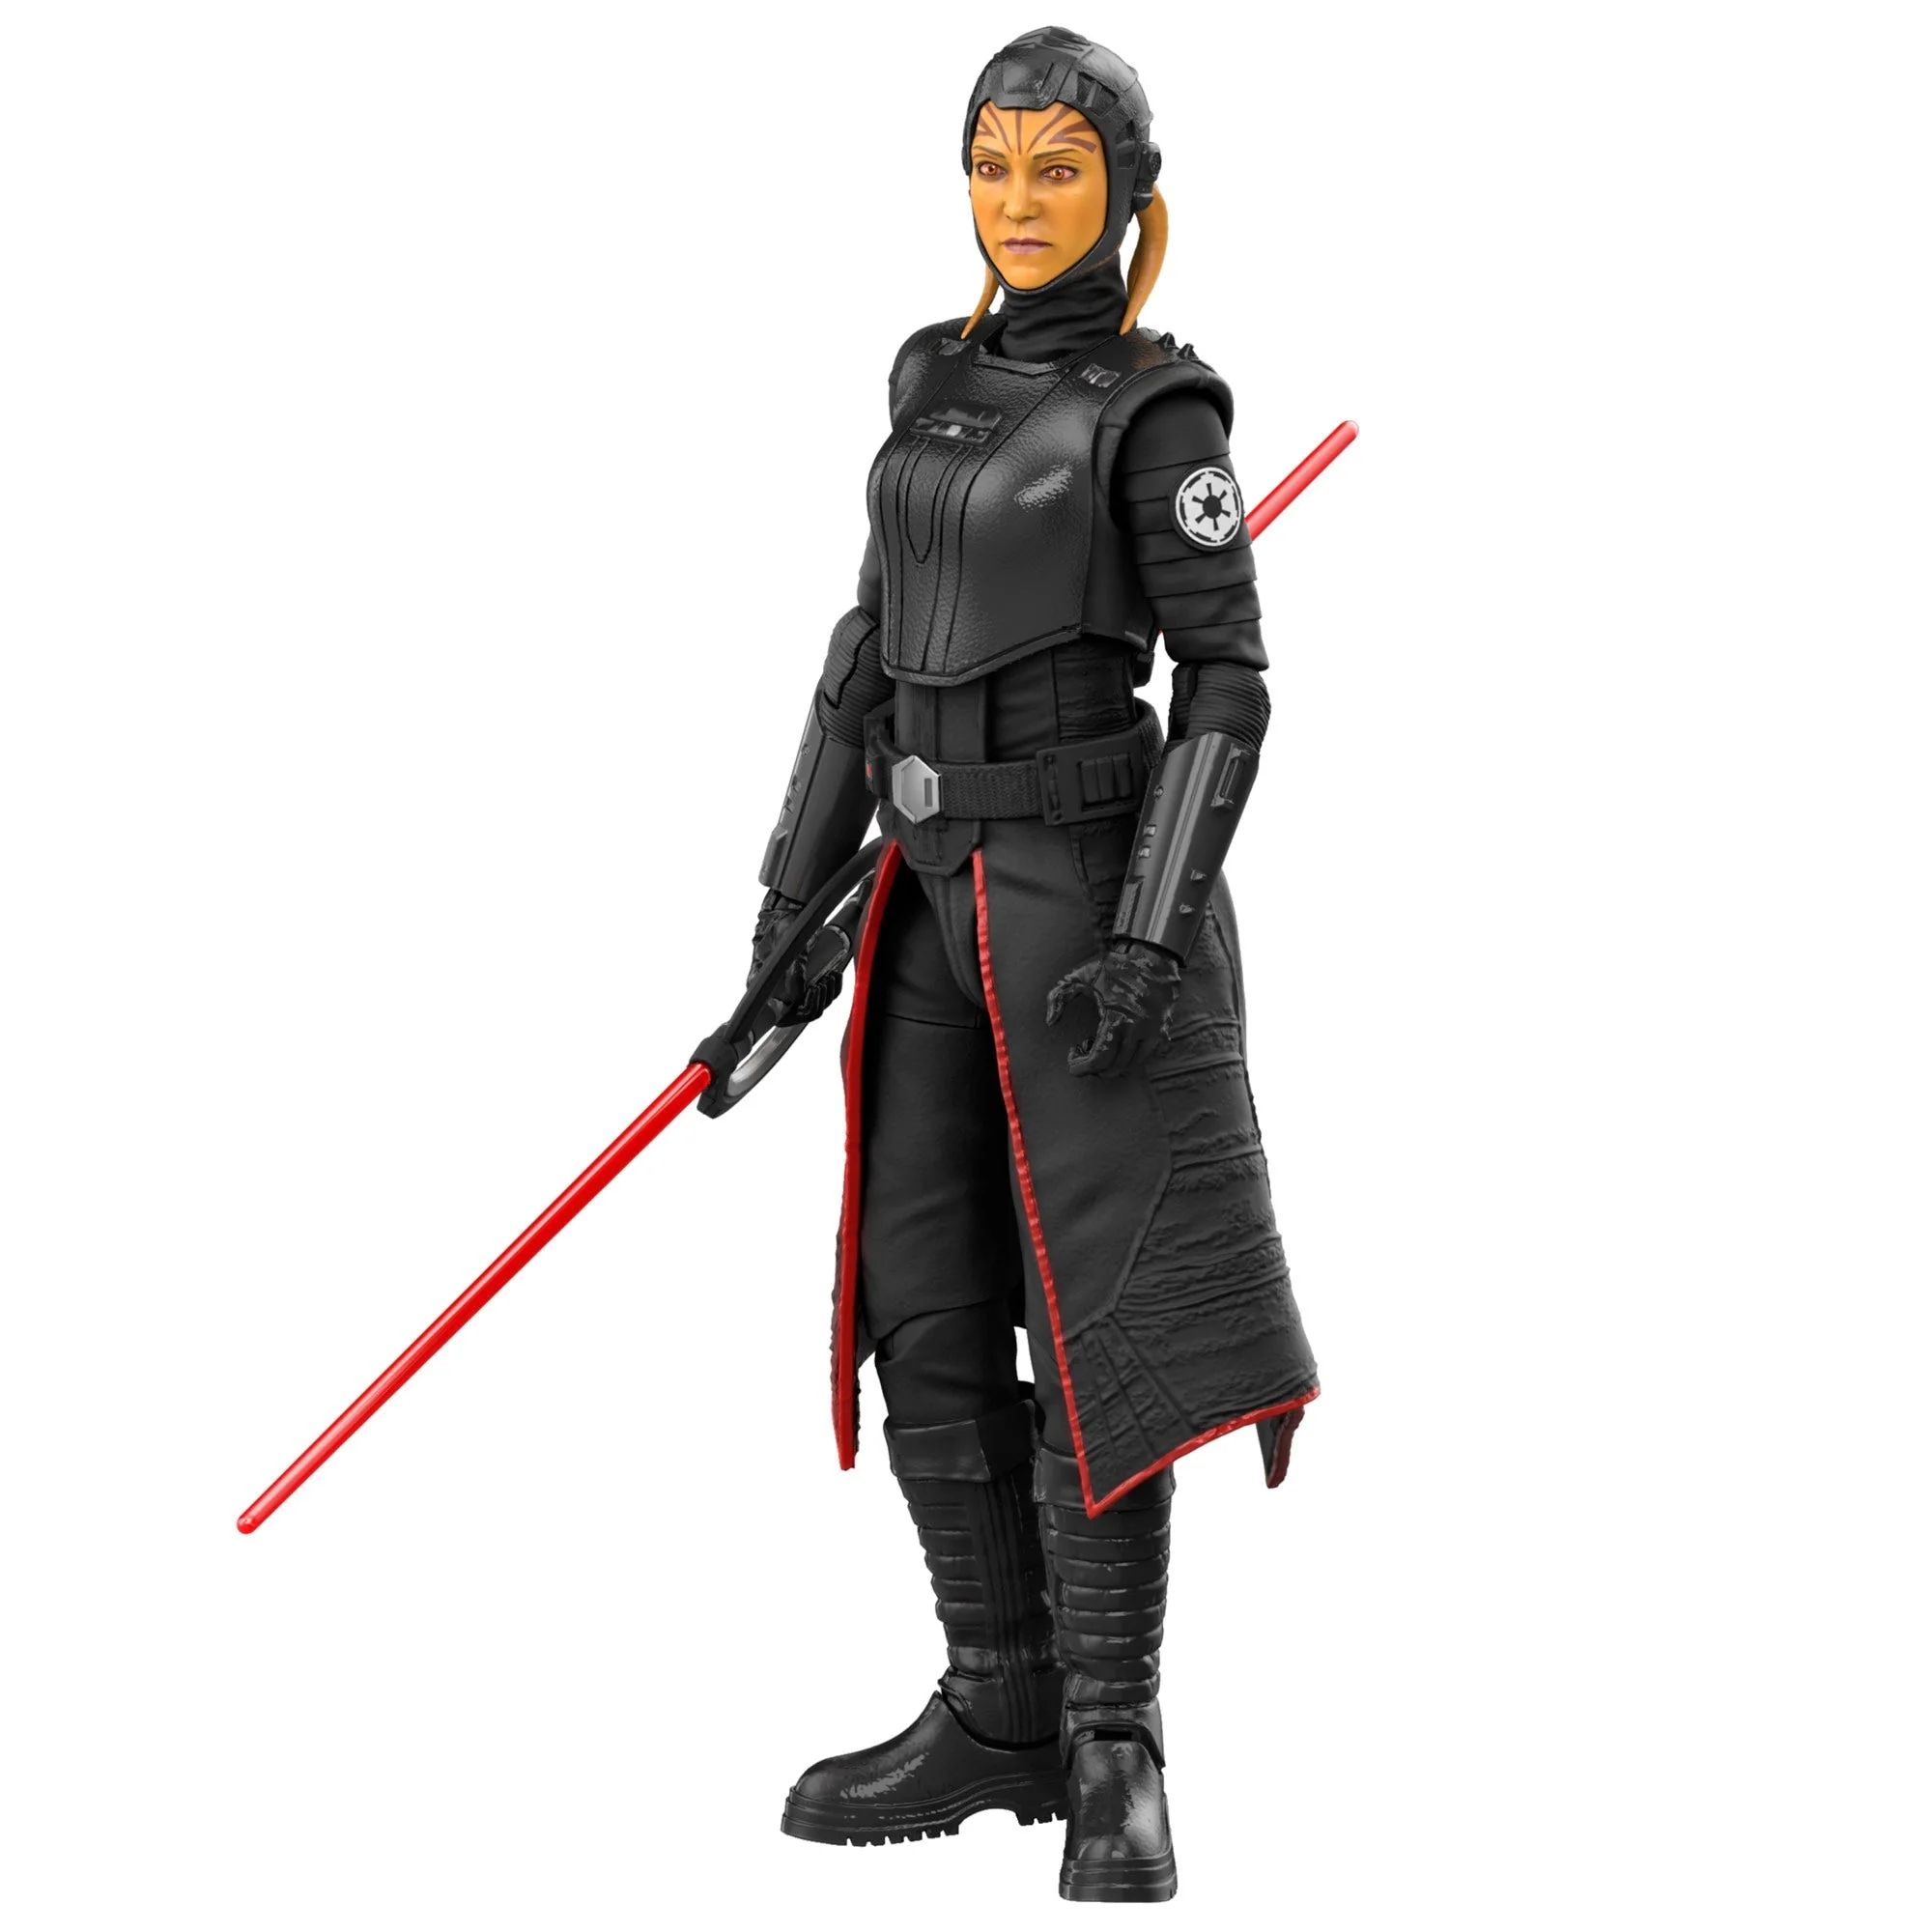 Inquisitore-quarta sorella-figurina-Star-Wars-Obi-Wan-Kenobi-serie nera-Hasbro-15-cm-5010996124845-regno-figurina-8